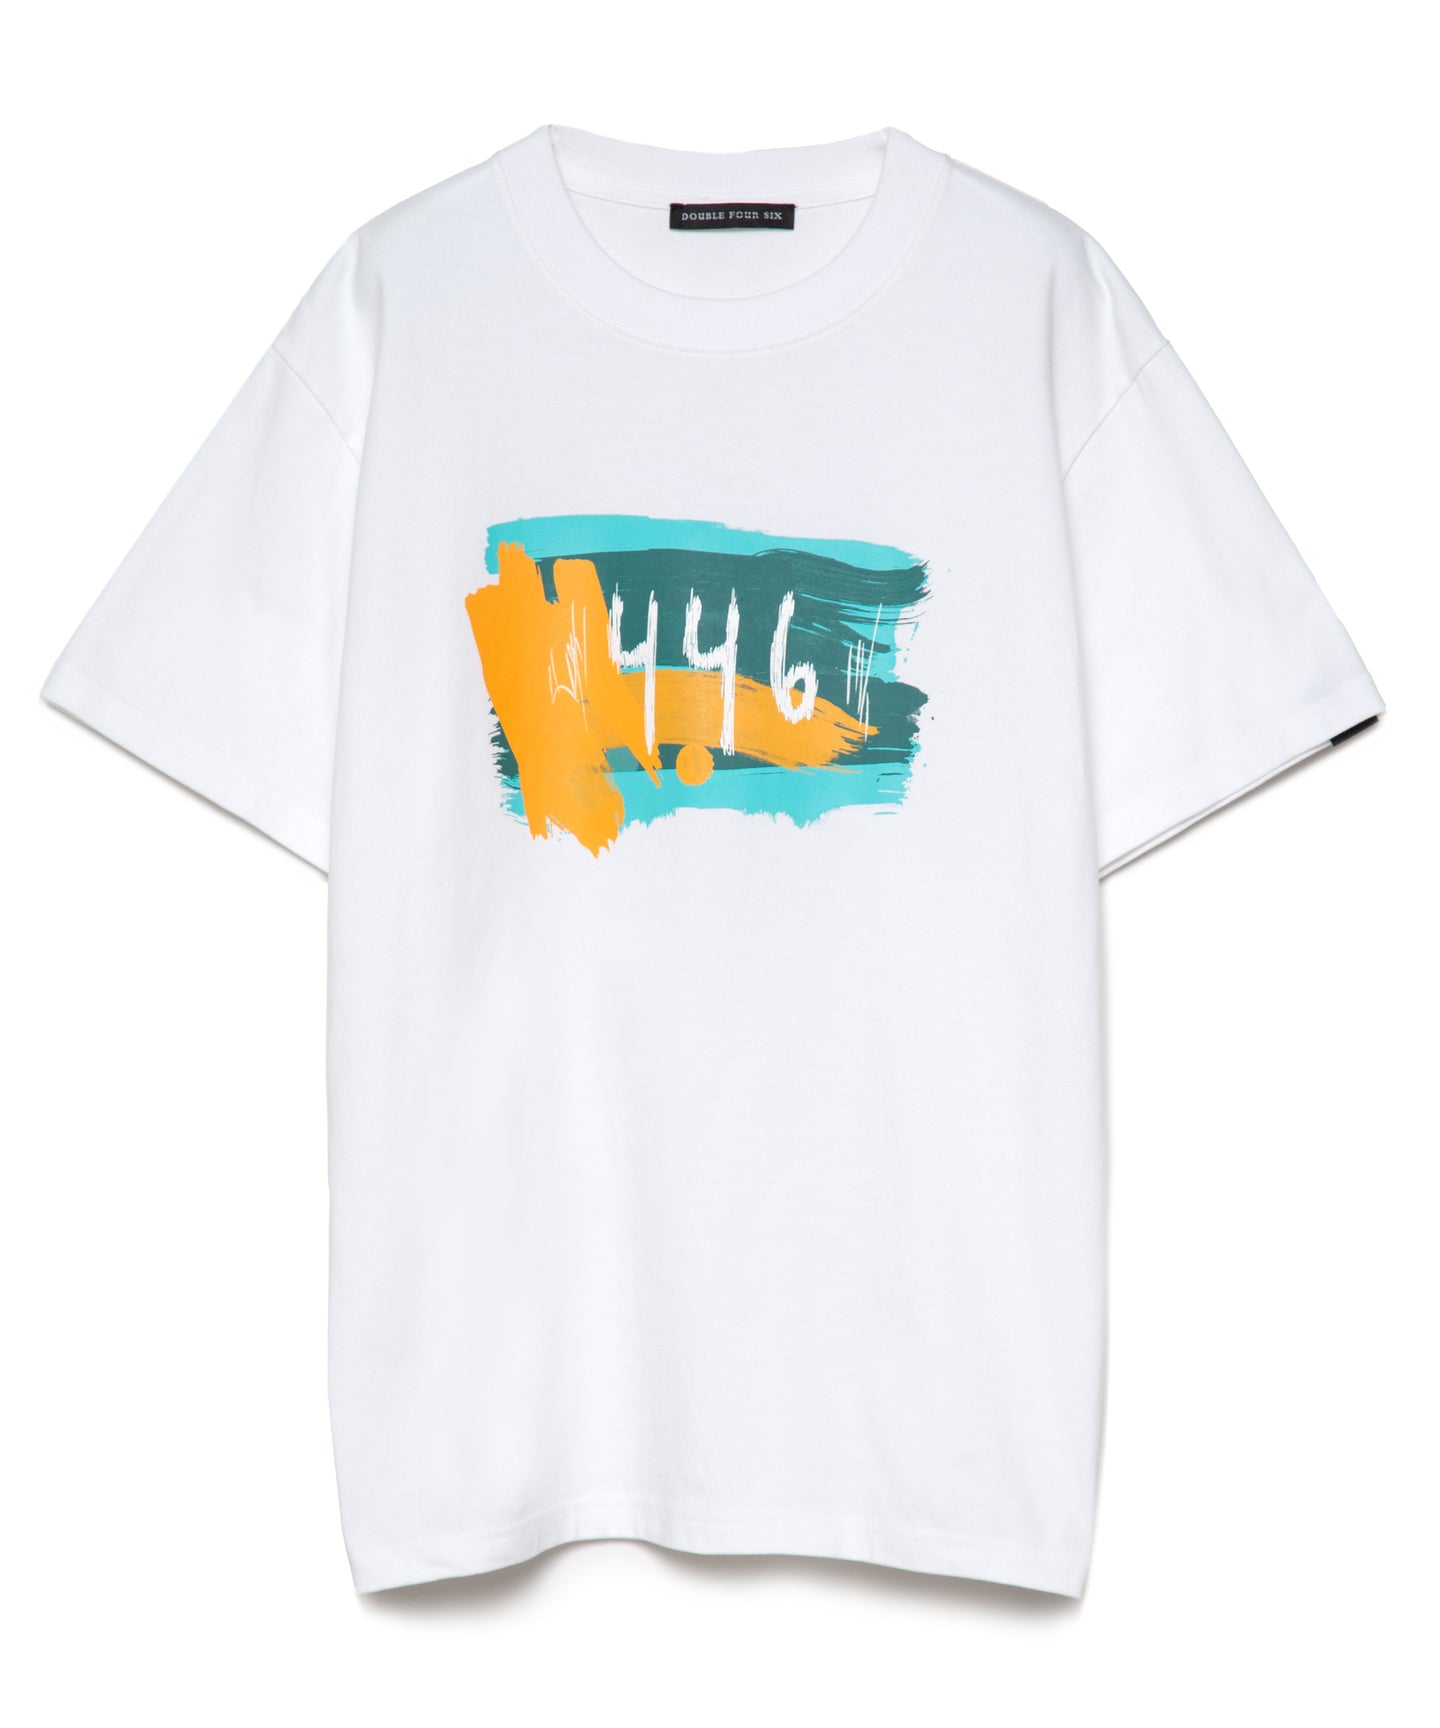 446- Brush Logo Print T-shirt White